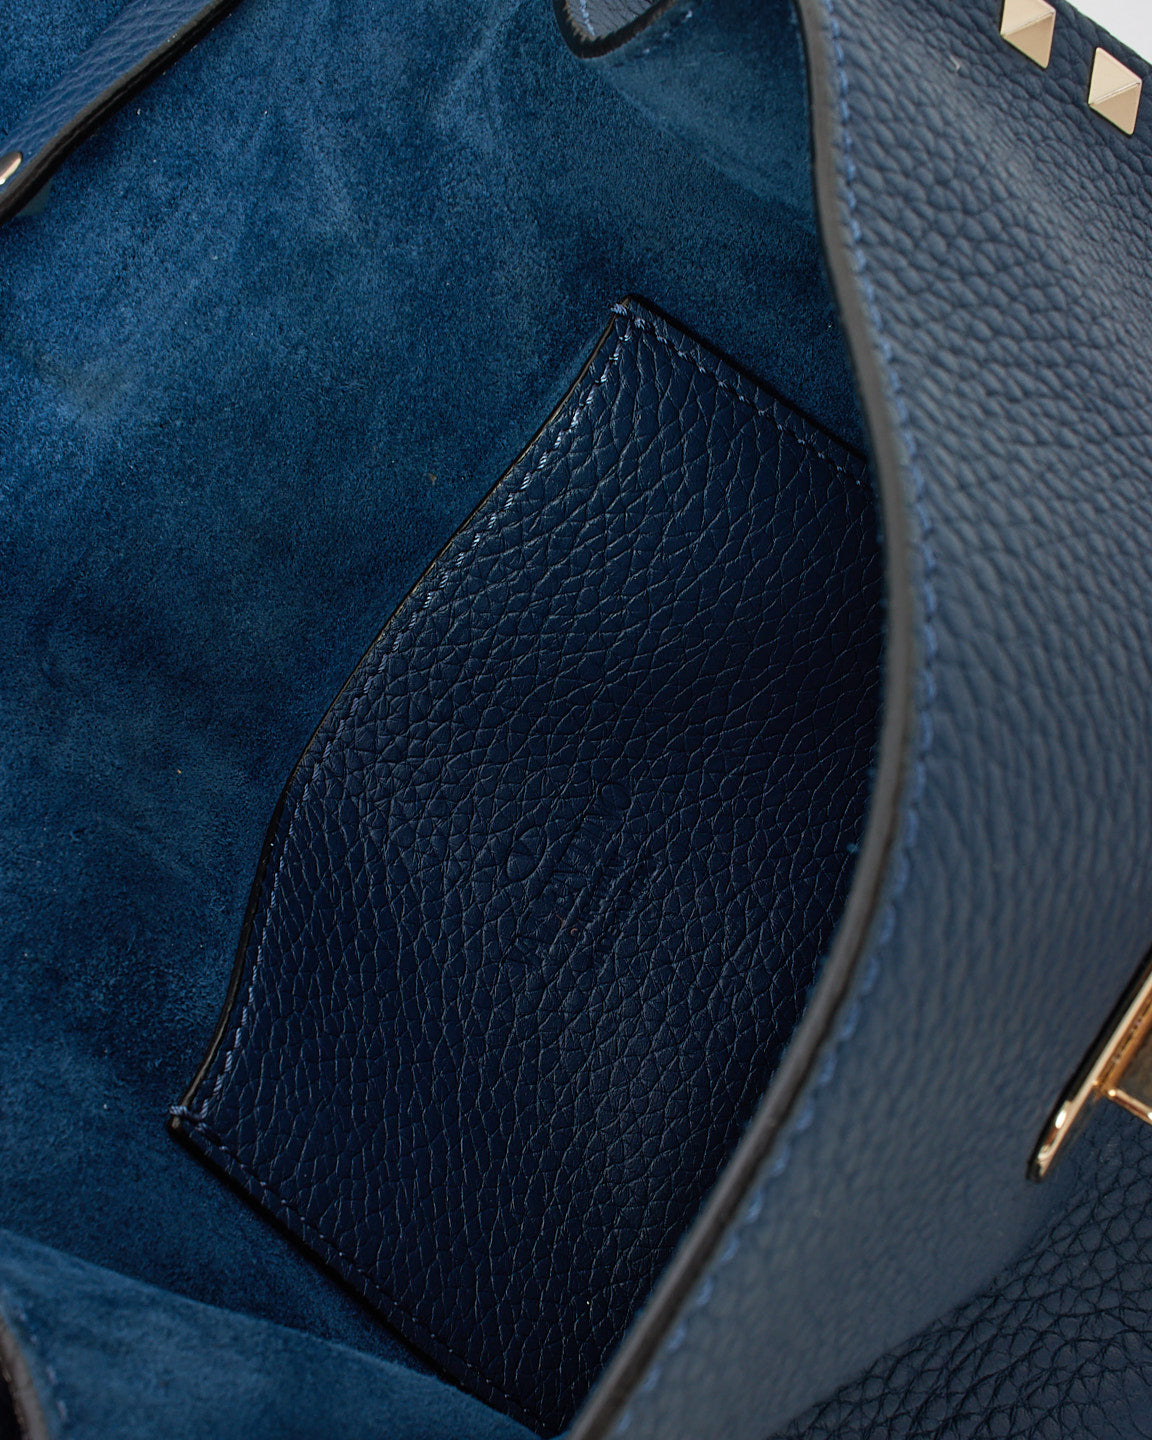 Valentino Navy Blue Grained Leather Rockstud Crossbody Bag